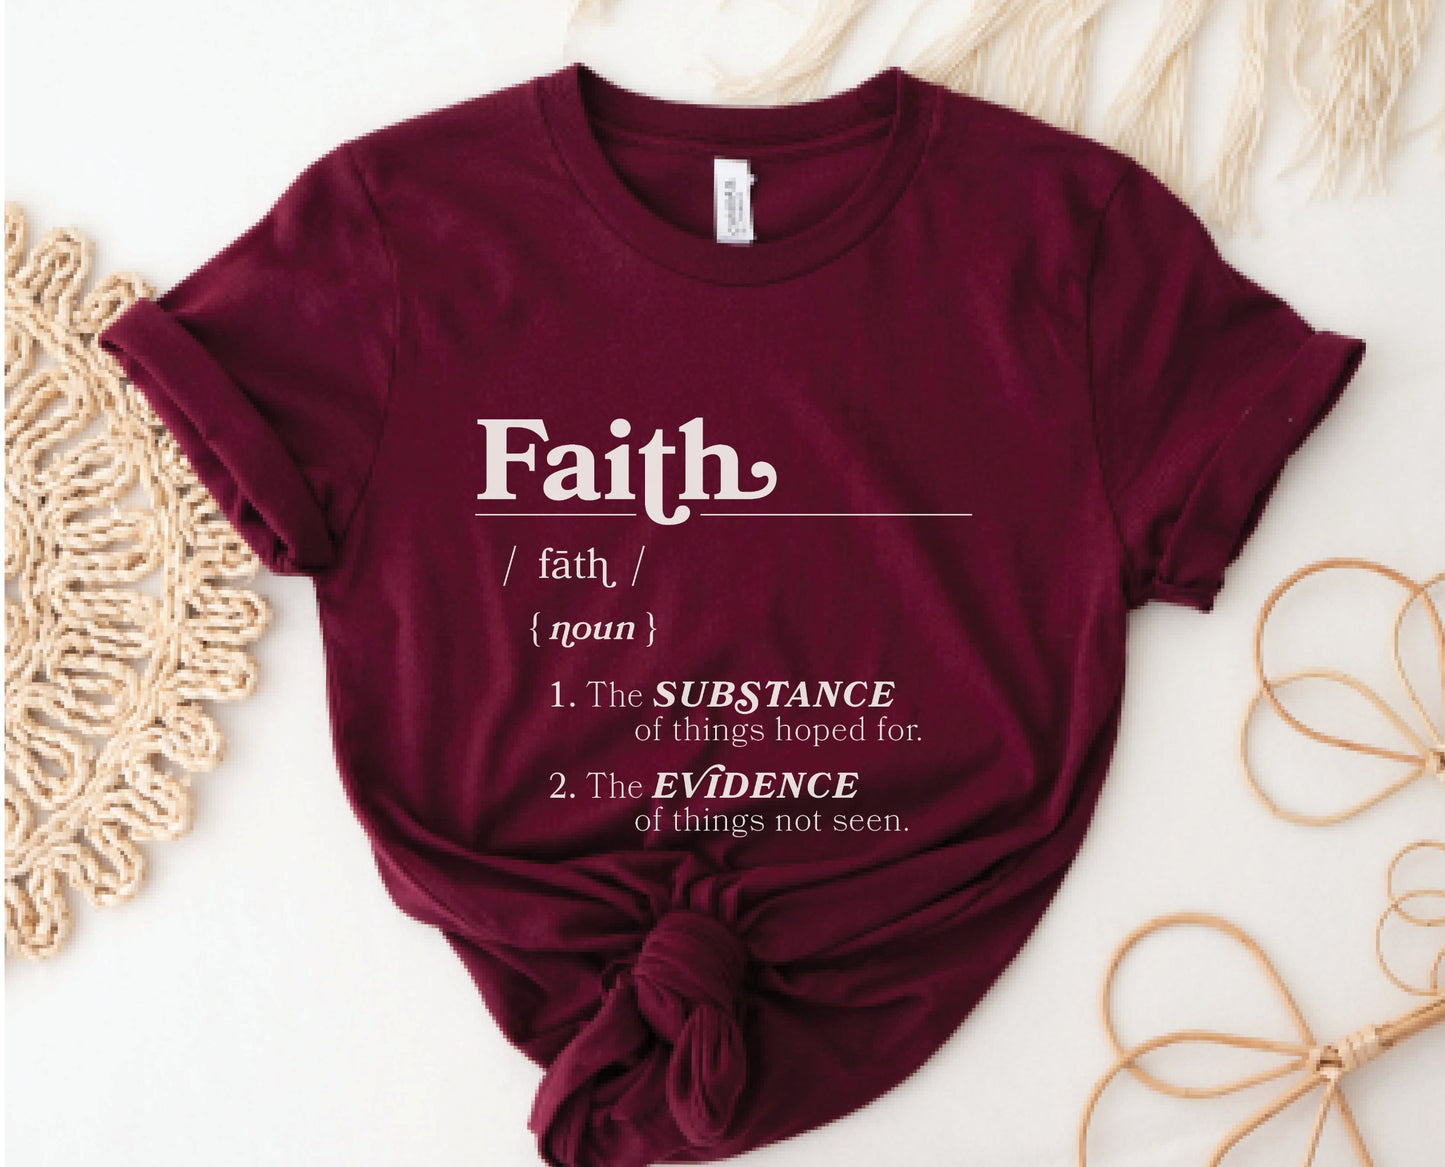 Faith Definition Hebrews 11:1 Christian aesthetic design printed in white on soft maroon burgundy unisex t-shirt for women and men